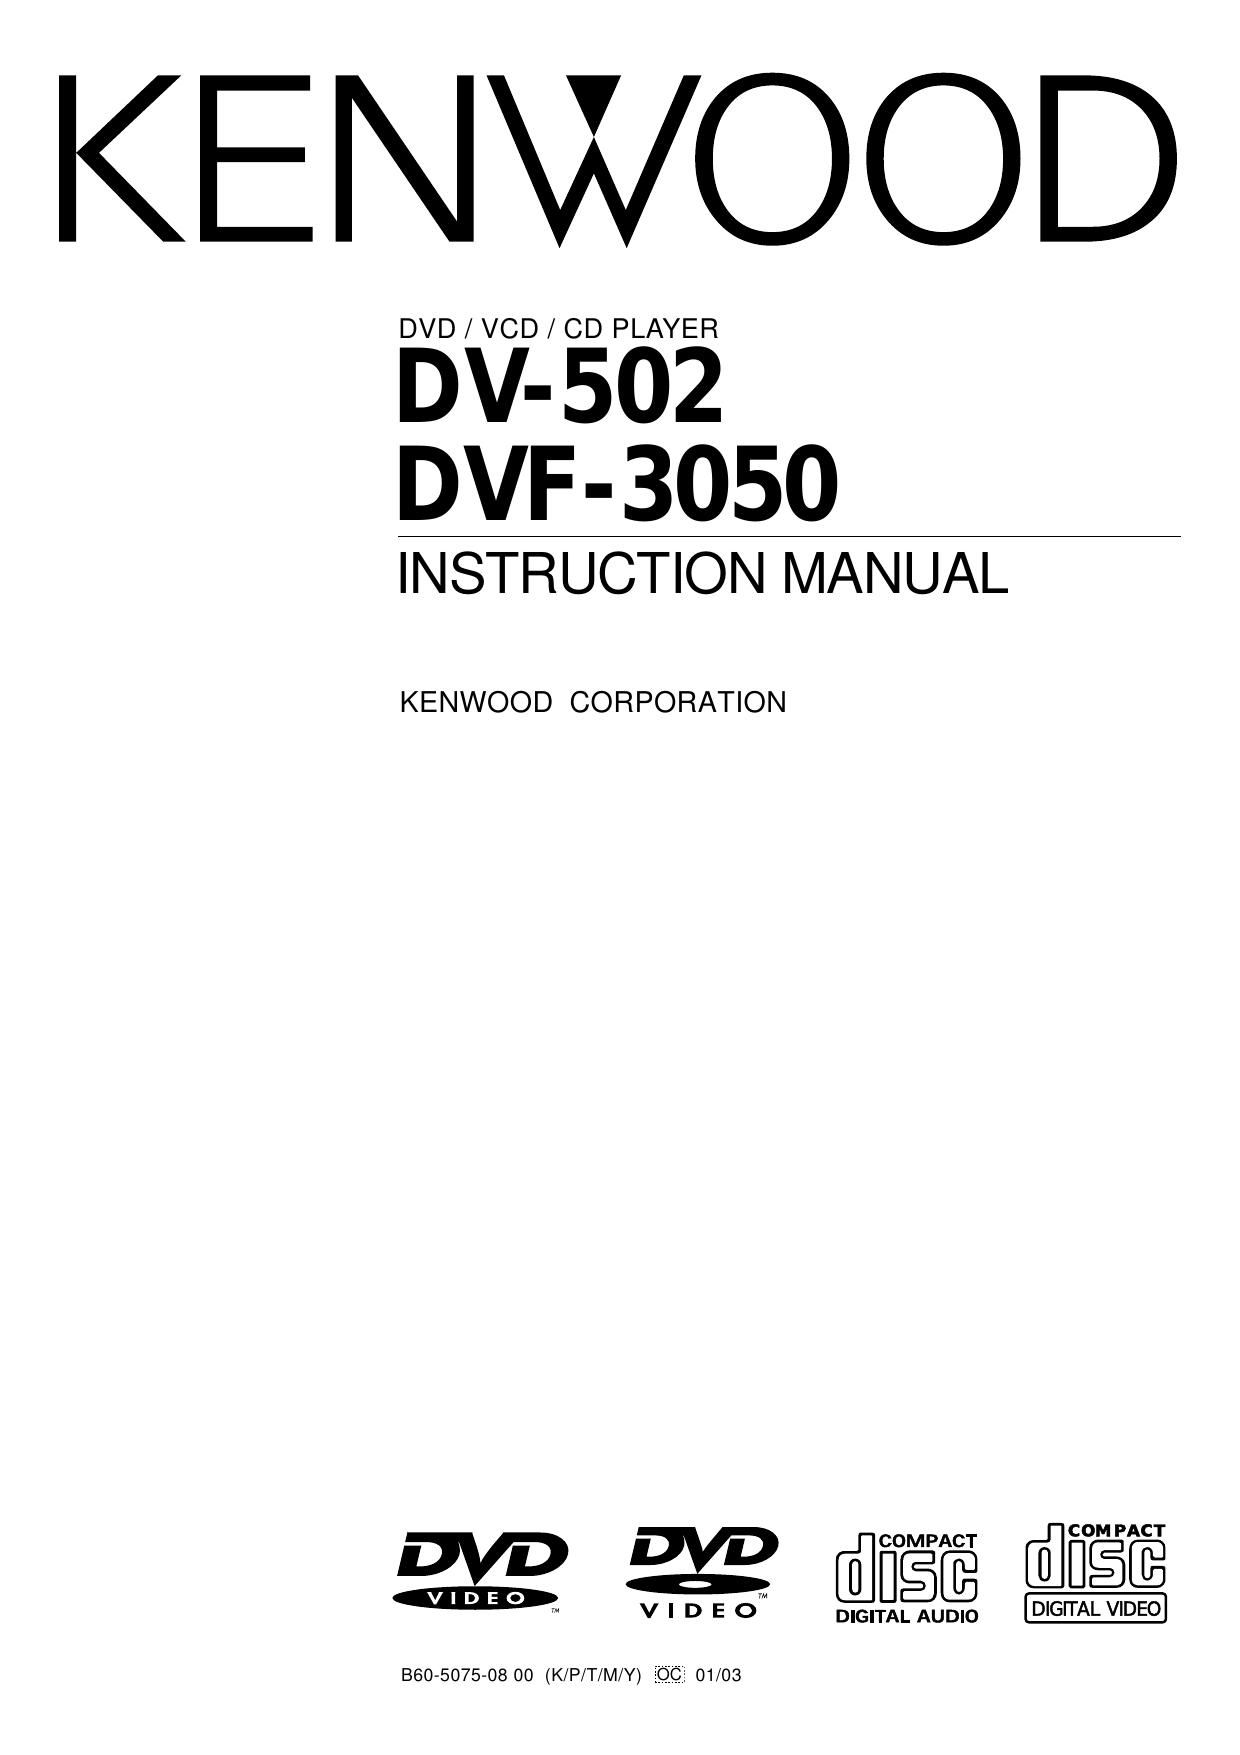 Kenwood DV 502 Owners Manual